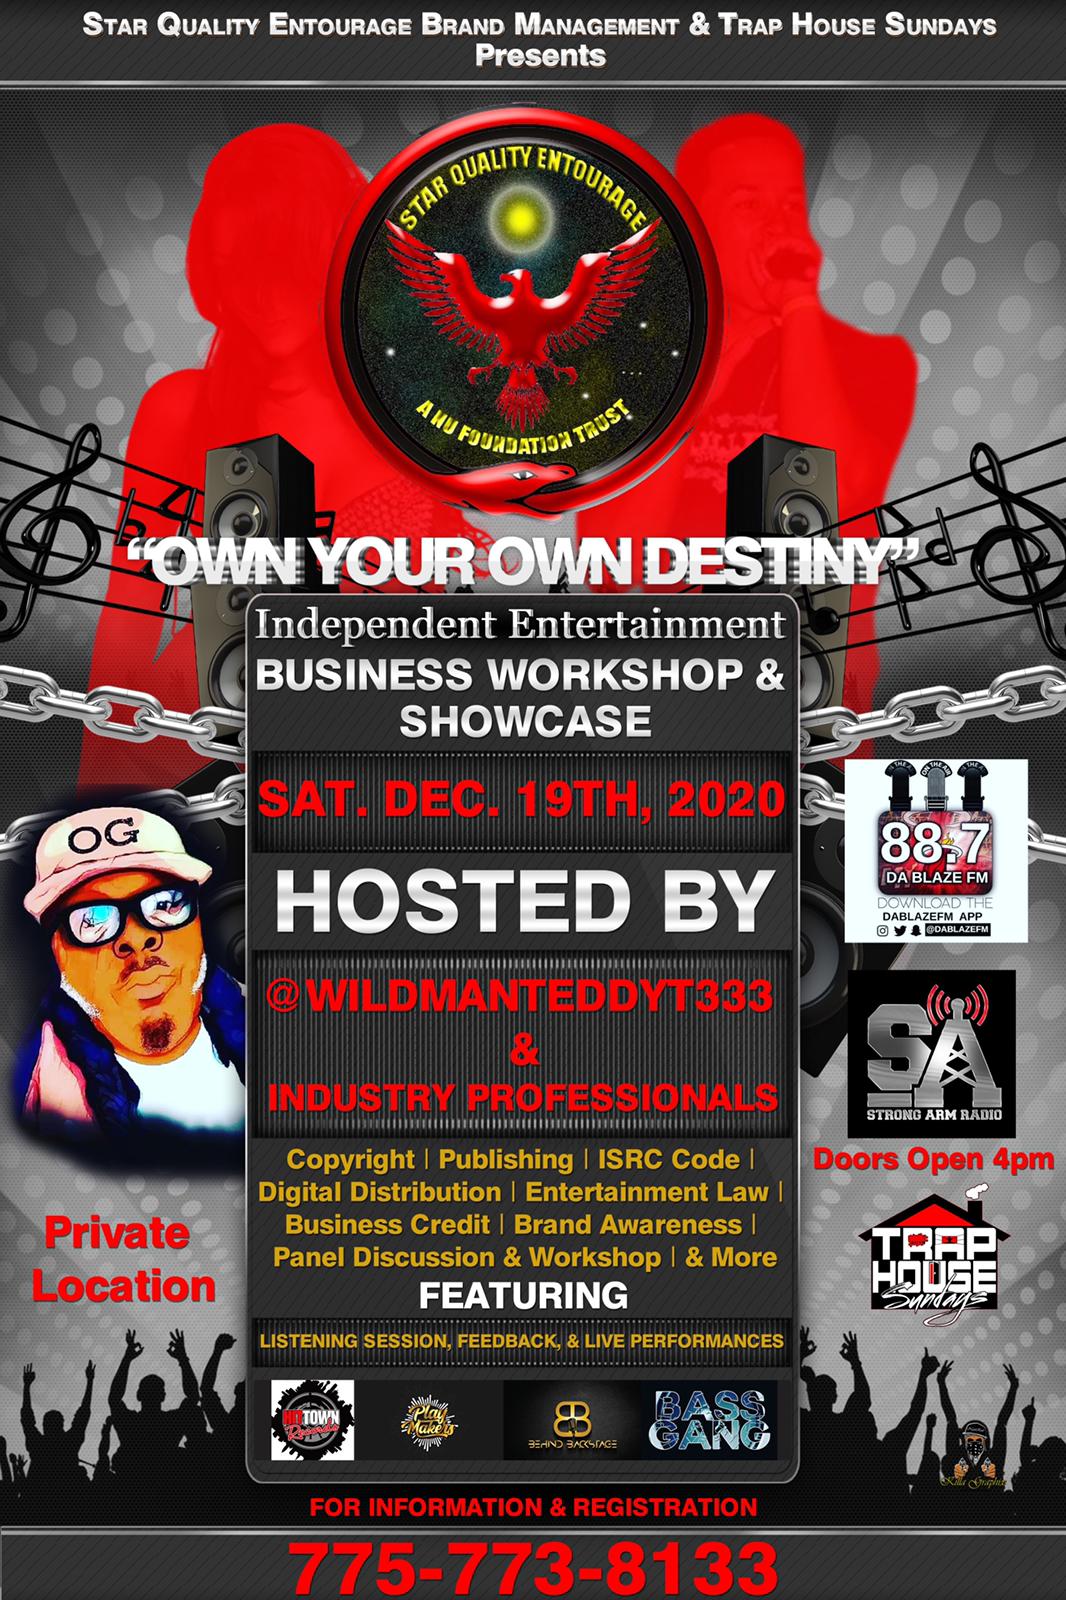 “Own Your Own Destiny” Independent Business Workshop & Showcase Sat Dec 19 2020